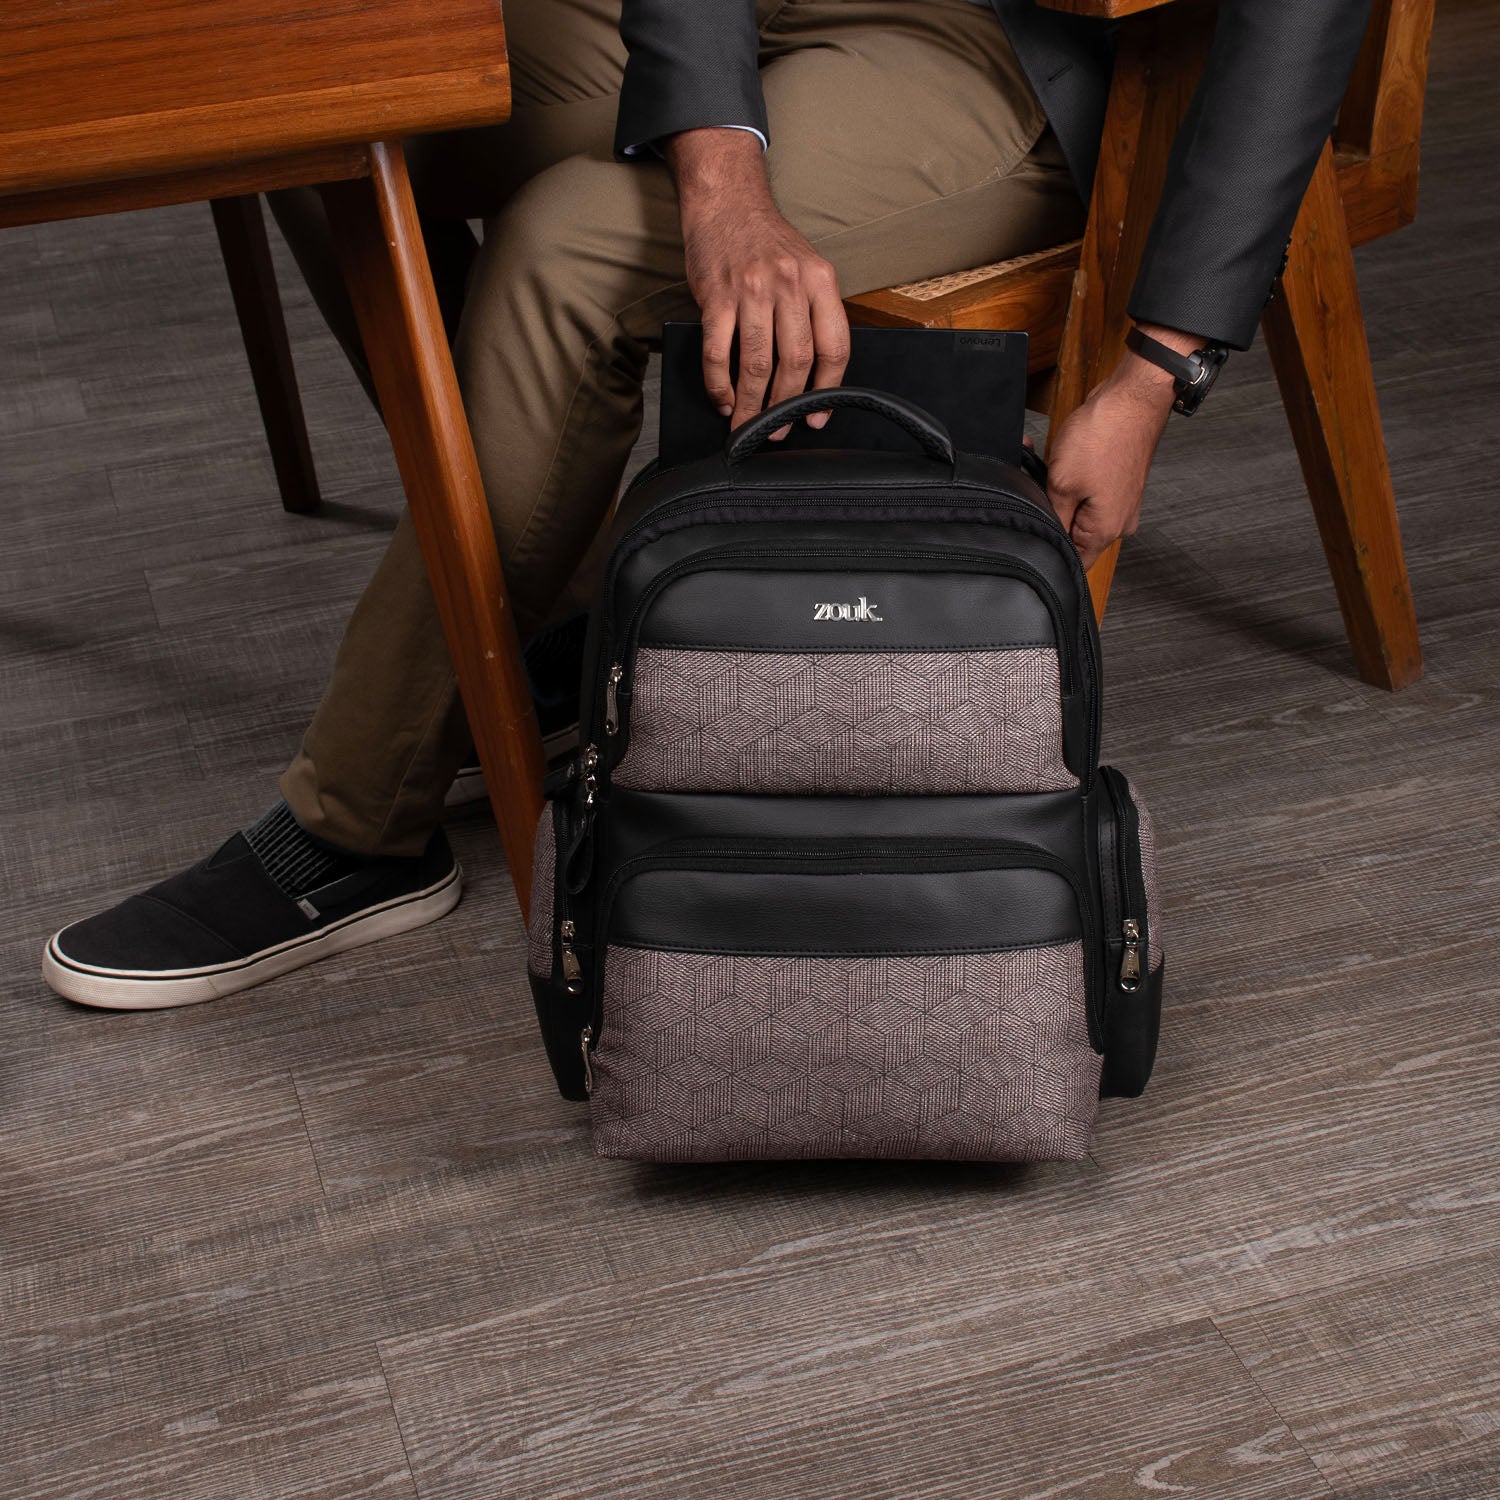 Travancore Texture Consultant Backpack